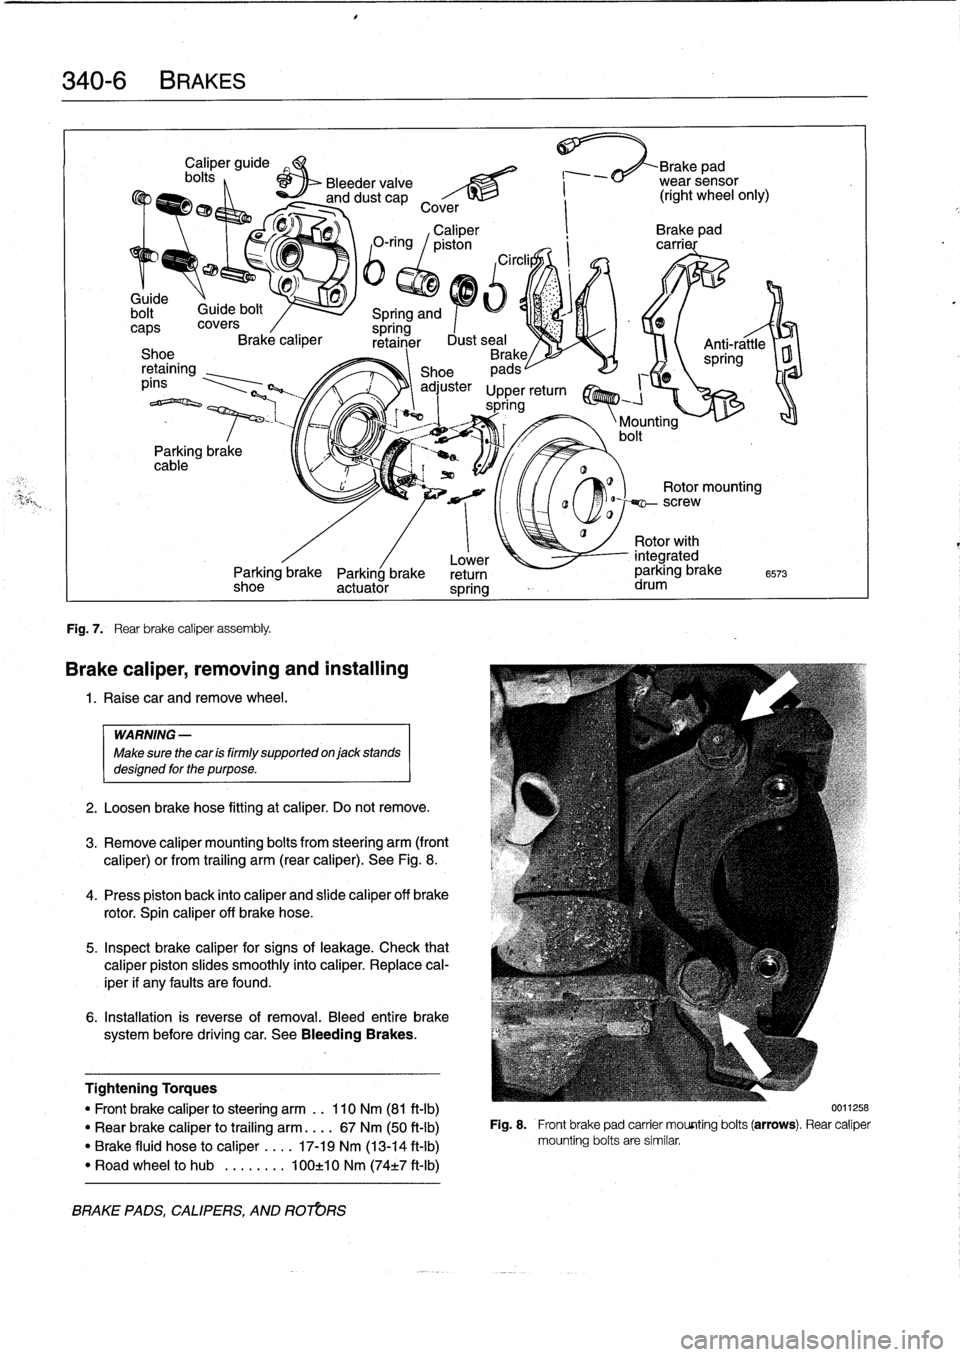 BMW 323i 1992 E36 Owners Guide 
340-
6BRAKES

bolt~

	

Guide
bolt

caps
covers
Brake
caliper
Shoe
retaining
píns

Parking
brake
cable

Fig
.
7
.

	

Rear
brake
caliper
assembly
.

Caliper
guide

	

Brake

	

ad
bolts
,

	

Bleede